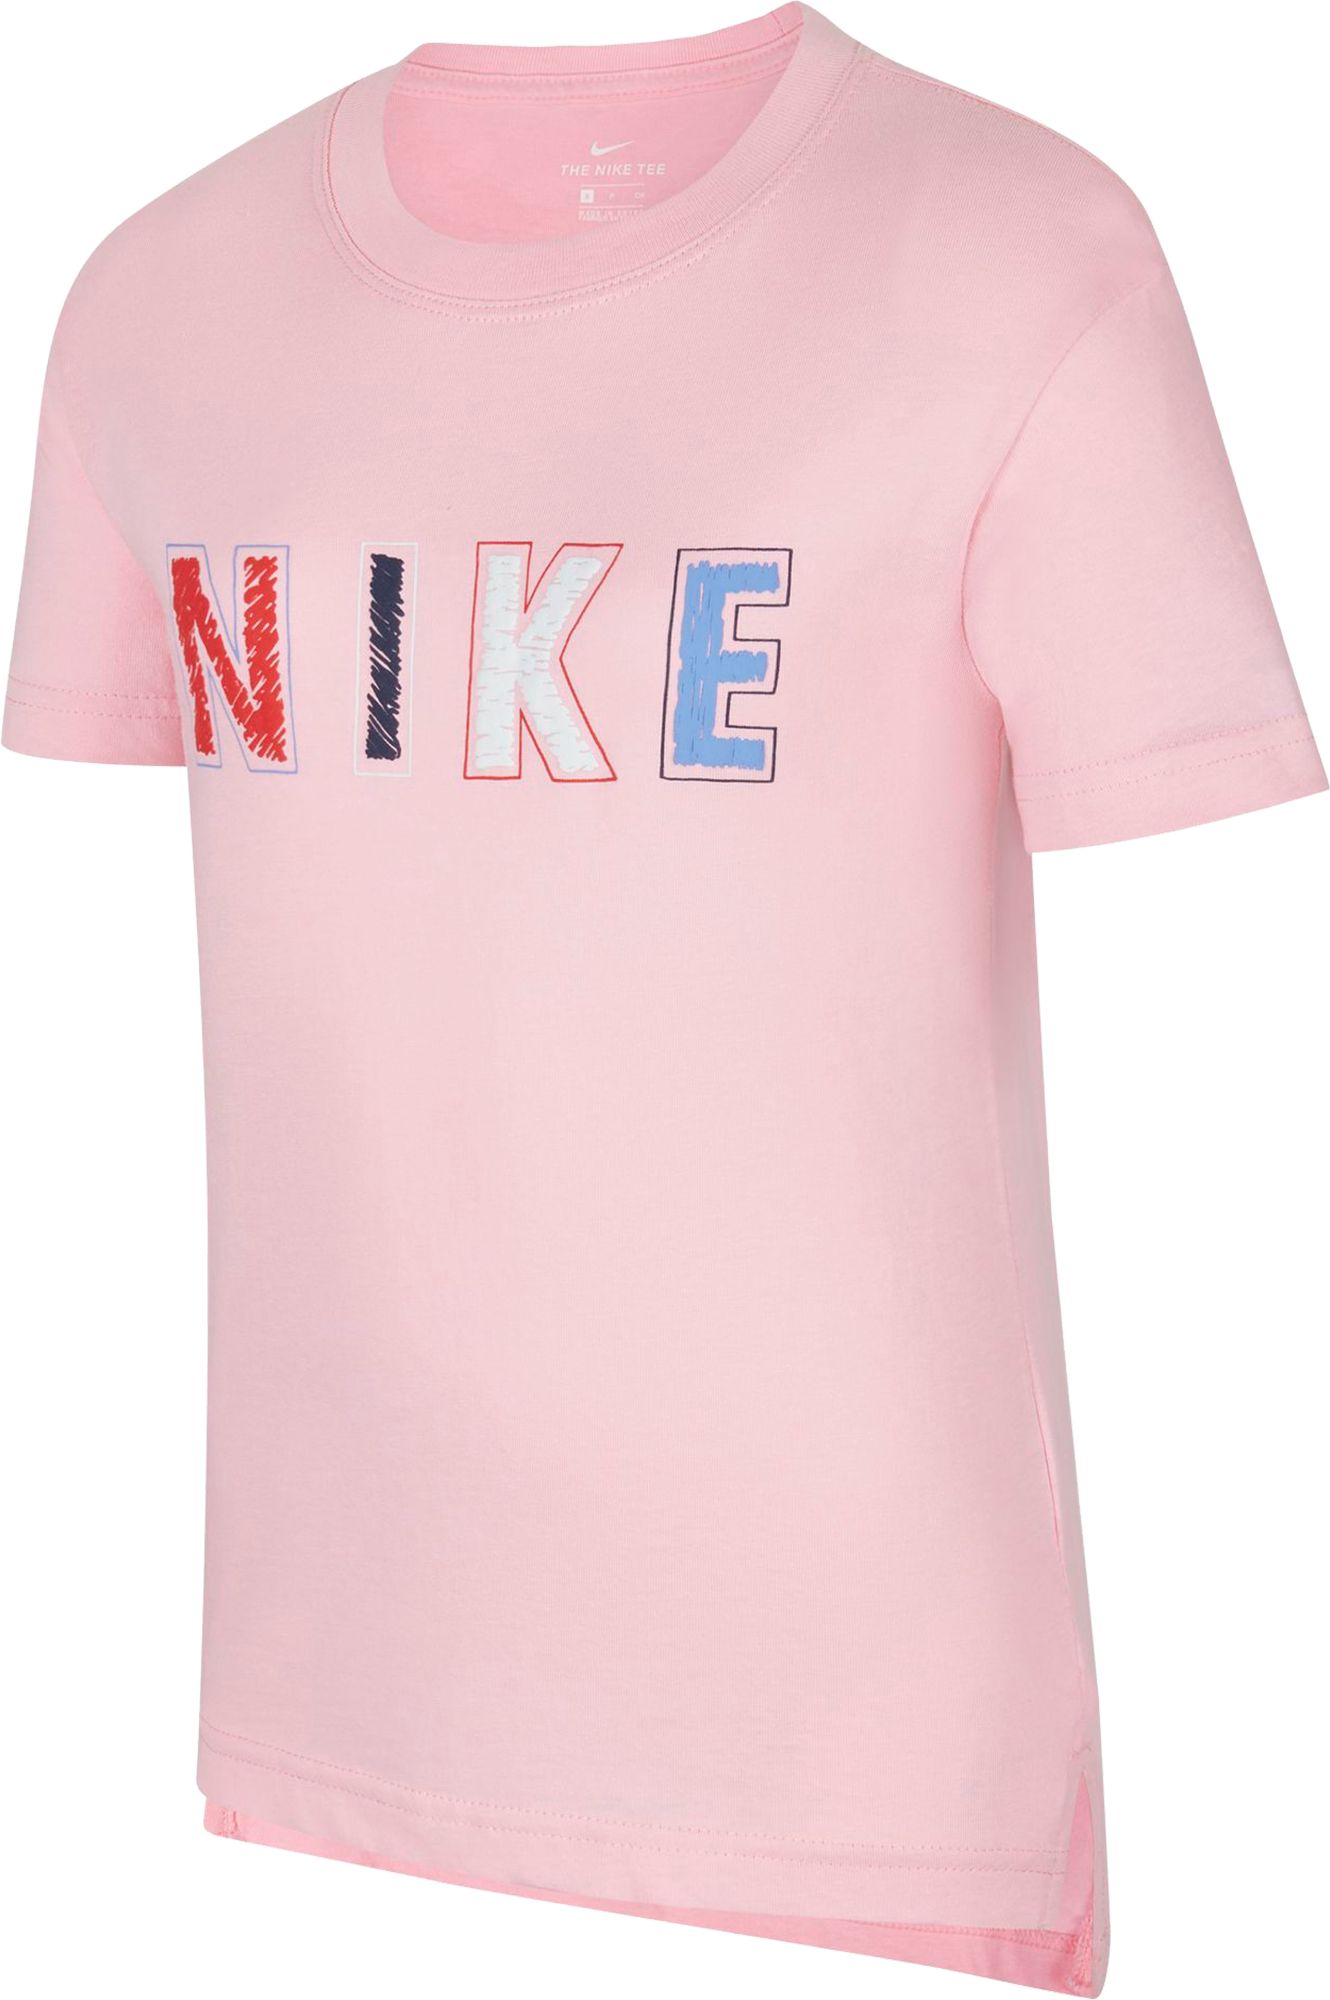 nike shirts for girls